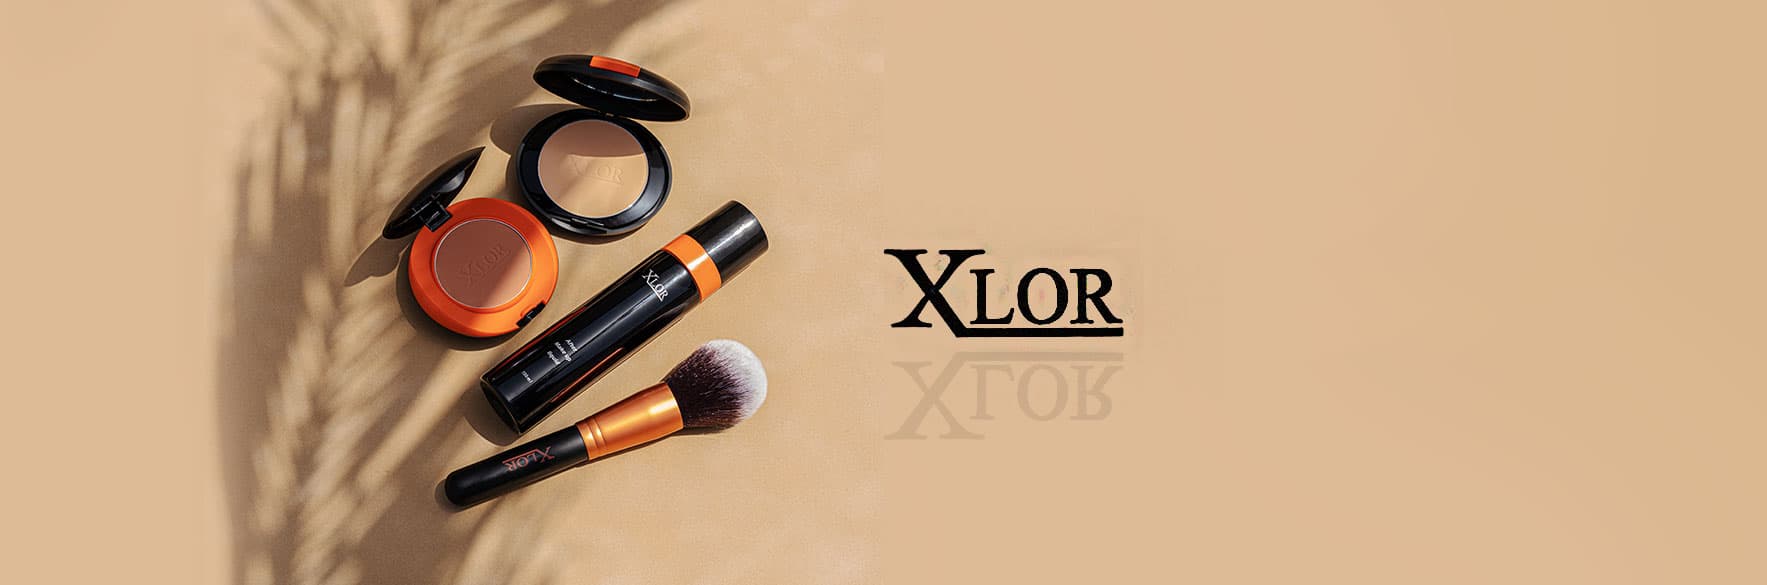 انواع محصولات آرایشی ایکس لر X LOR